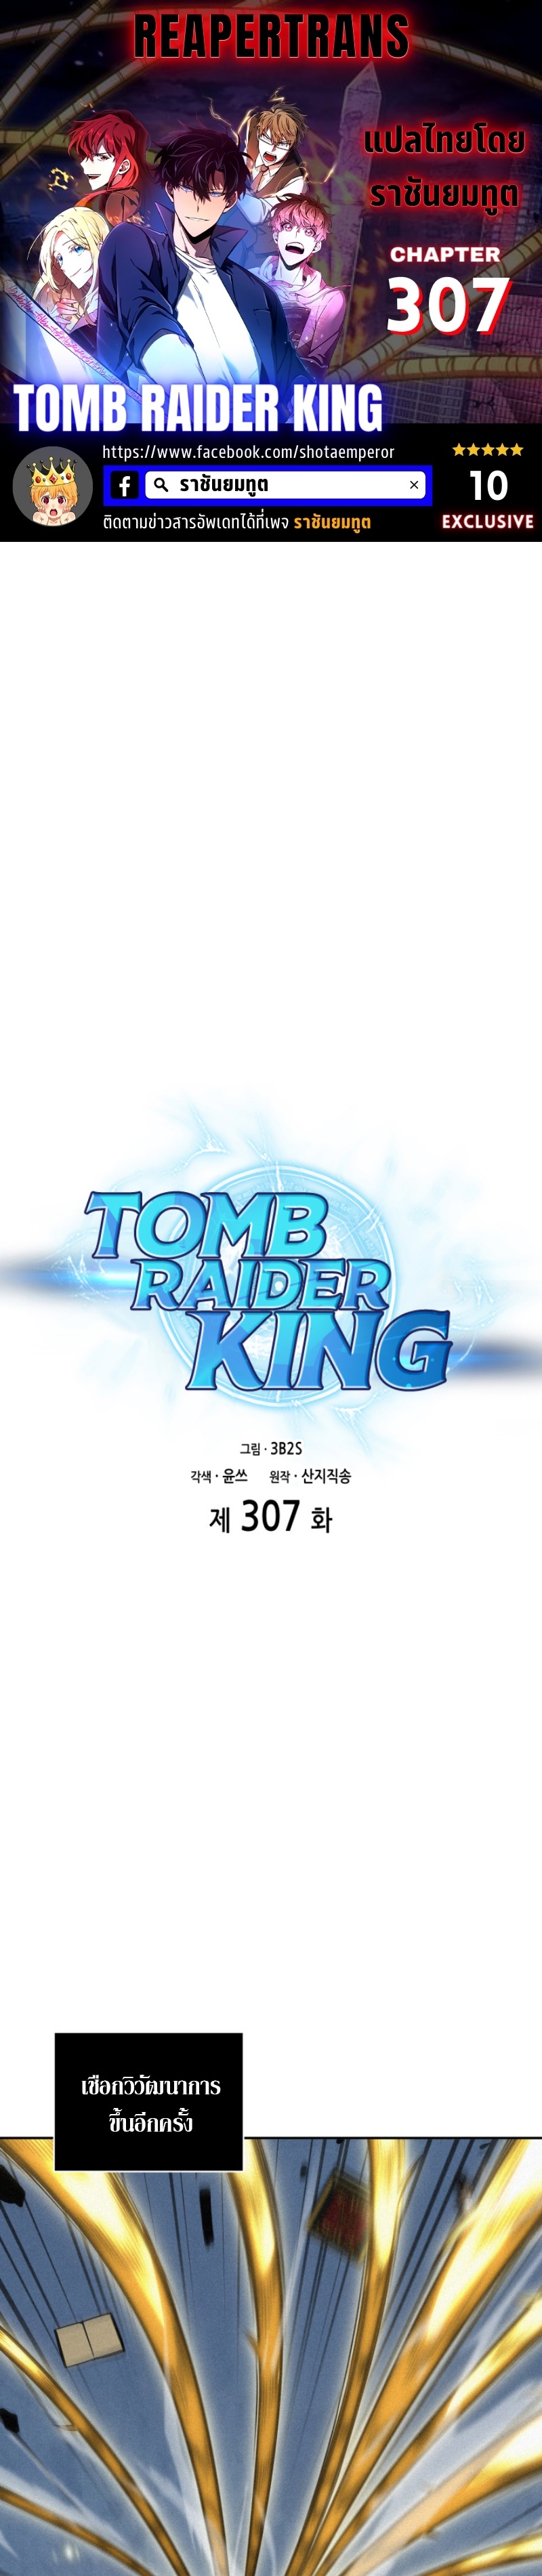 tomb raider king 307.01